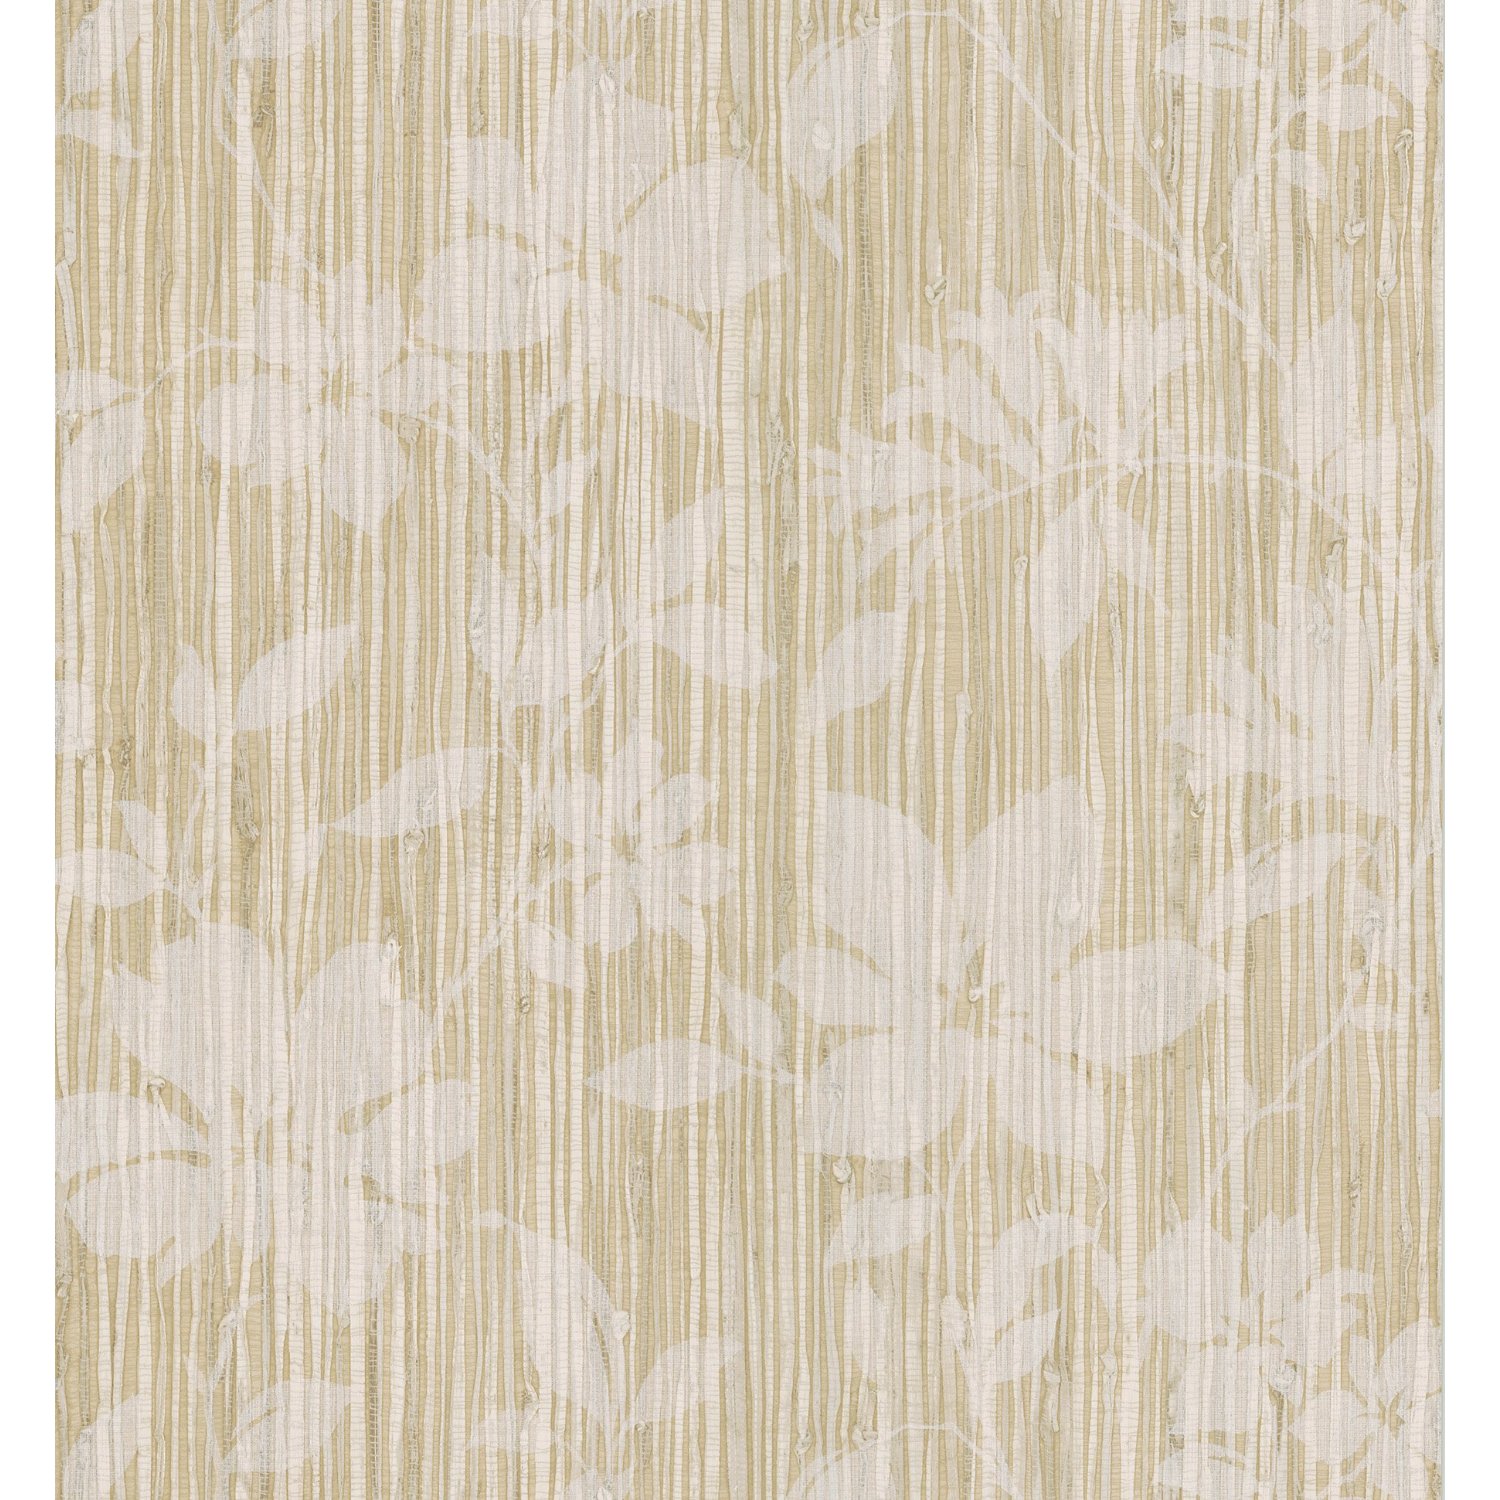 Designs Beautiful Grasscloth Wallpaper Contemporary Design For Wall